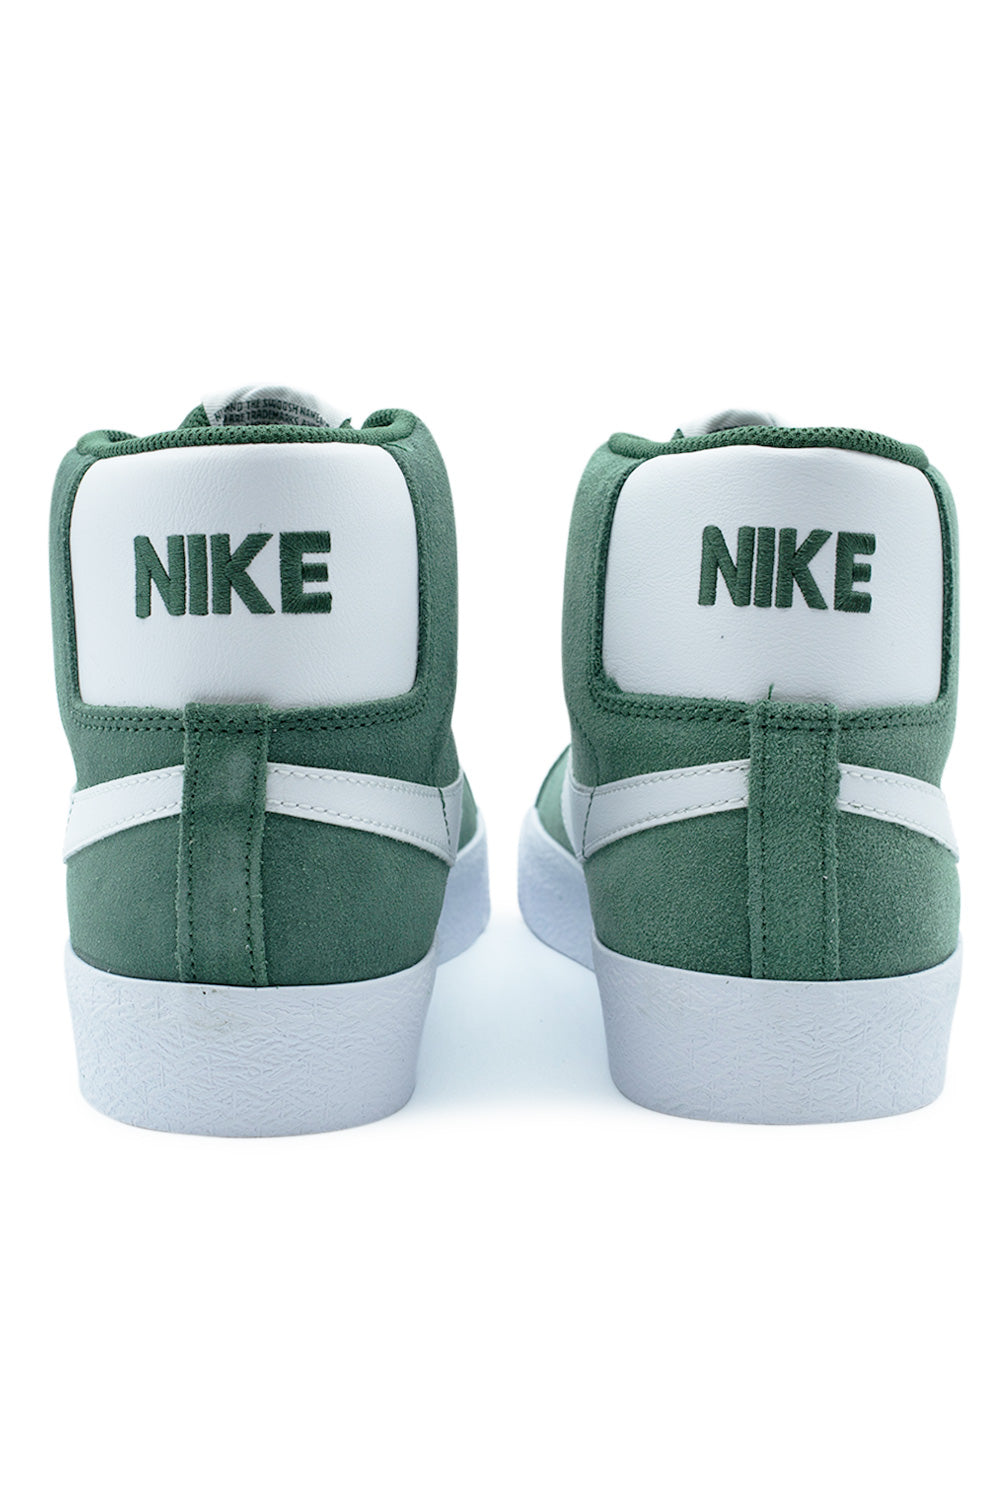 Nike SB Zoom Blazer Mid Shoe Fir / White / Fir / White - BONKERS